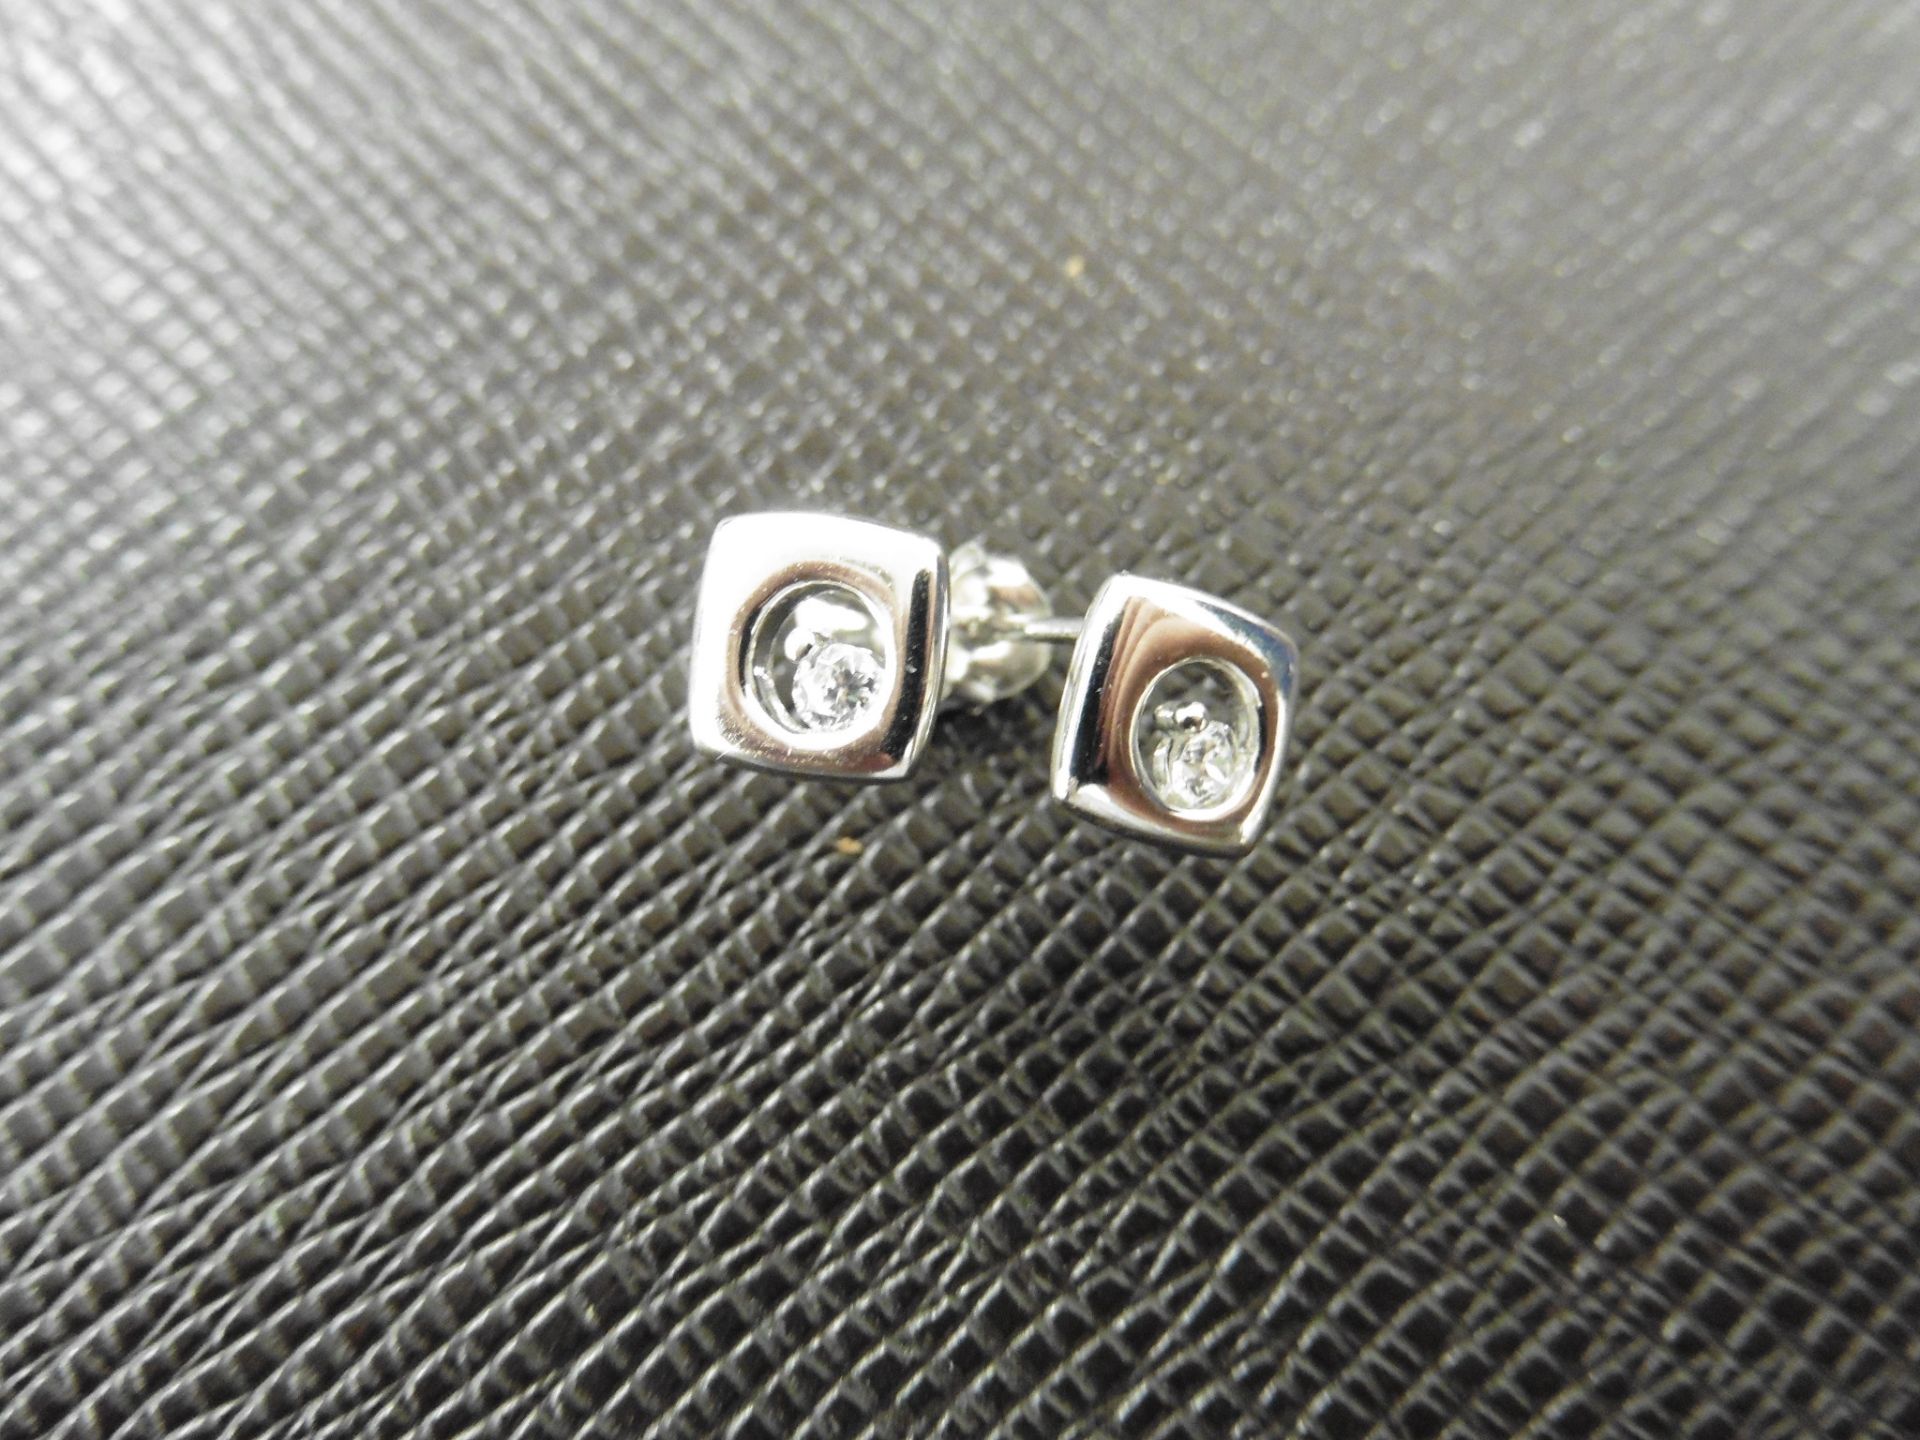 0.10ct diamond earrings set in platinum 950. 2 small brilliant cut diamonds, H colourand si2